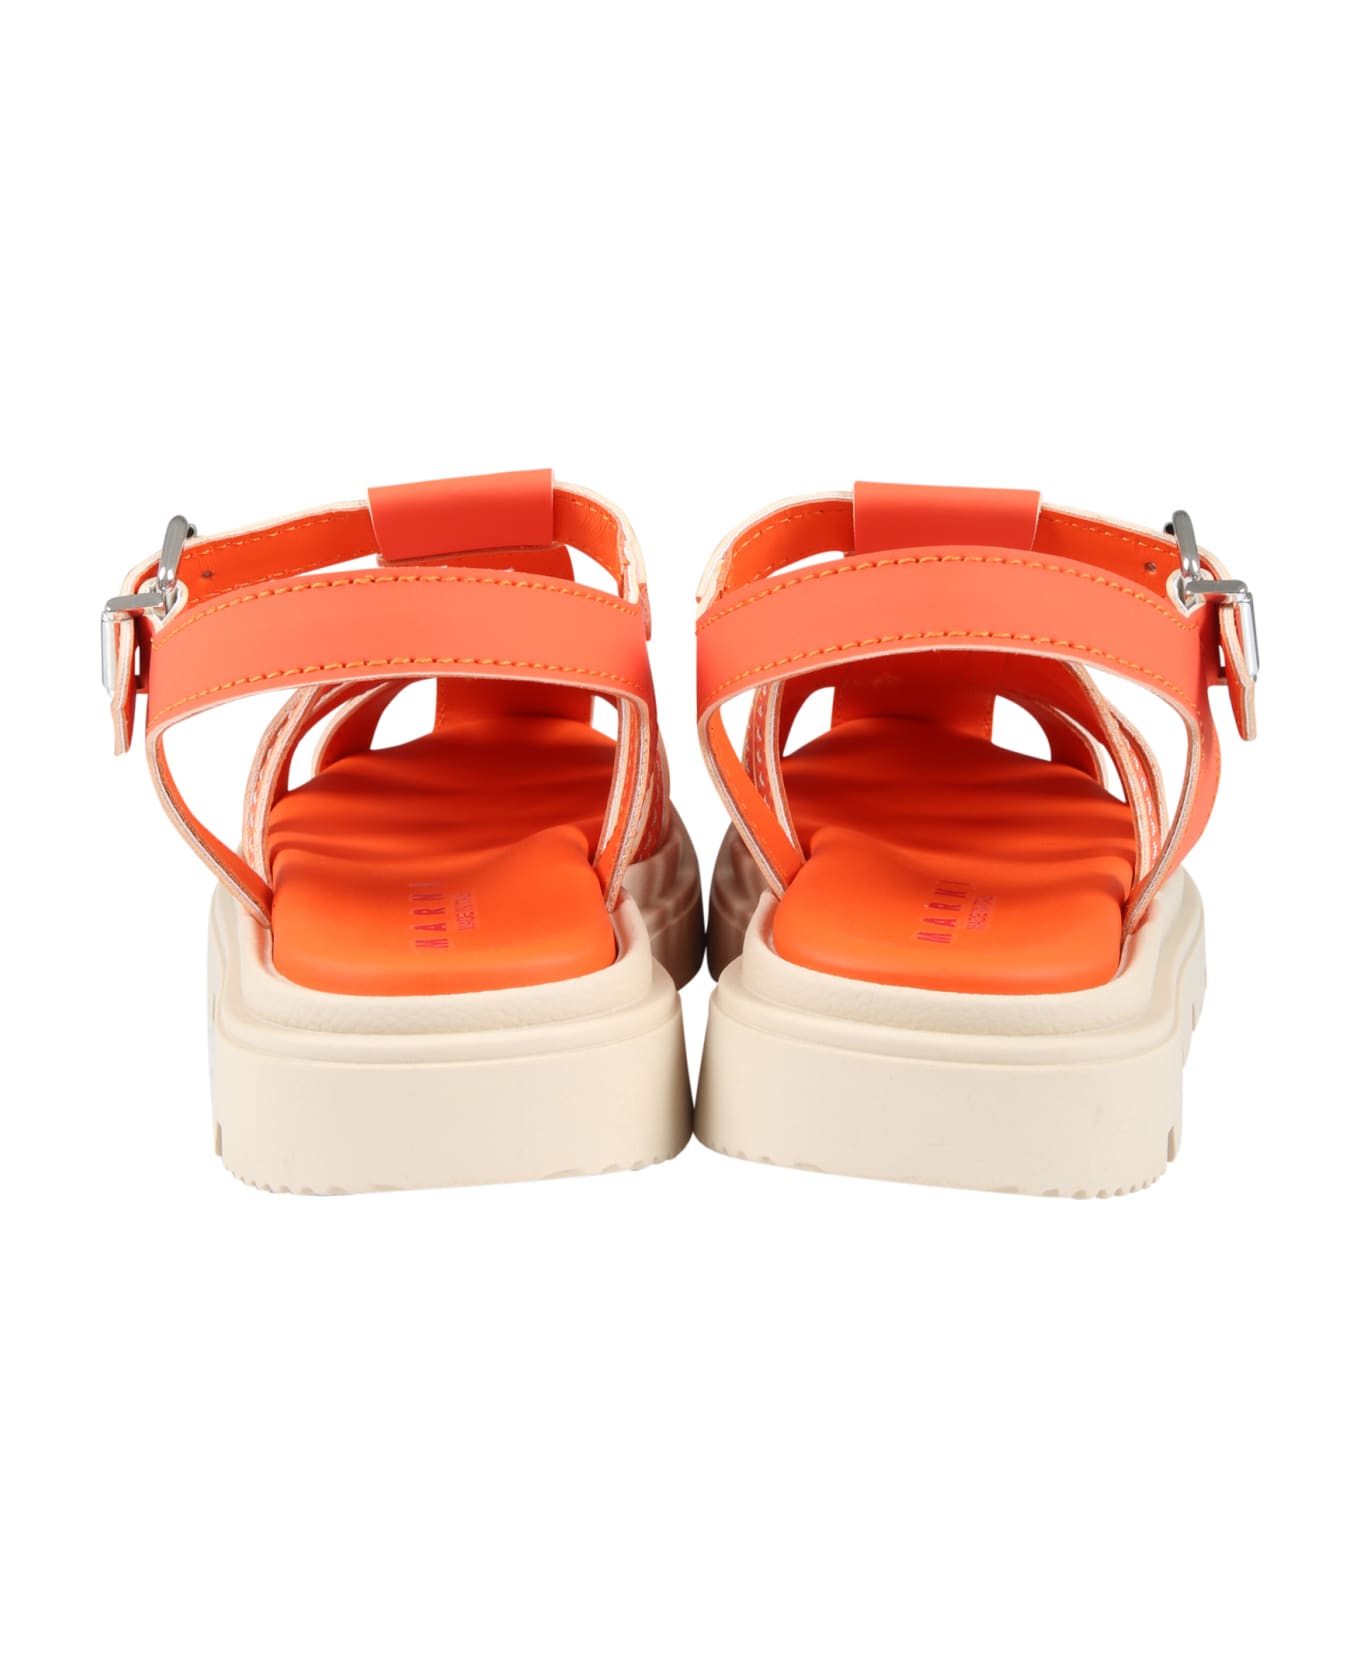 Marni Orange Sandals For Girl With Red Logo - Orange